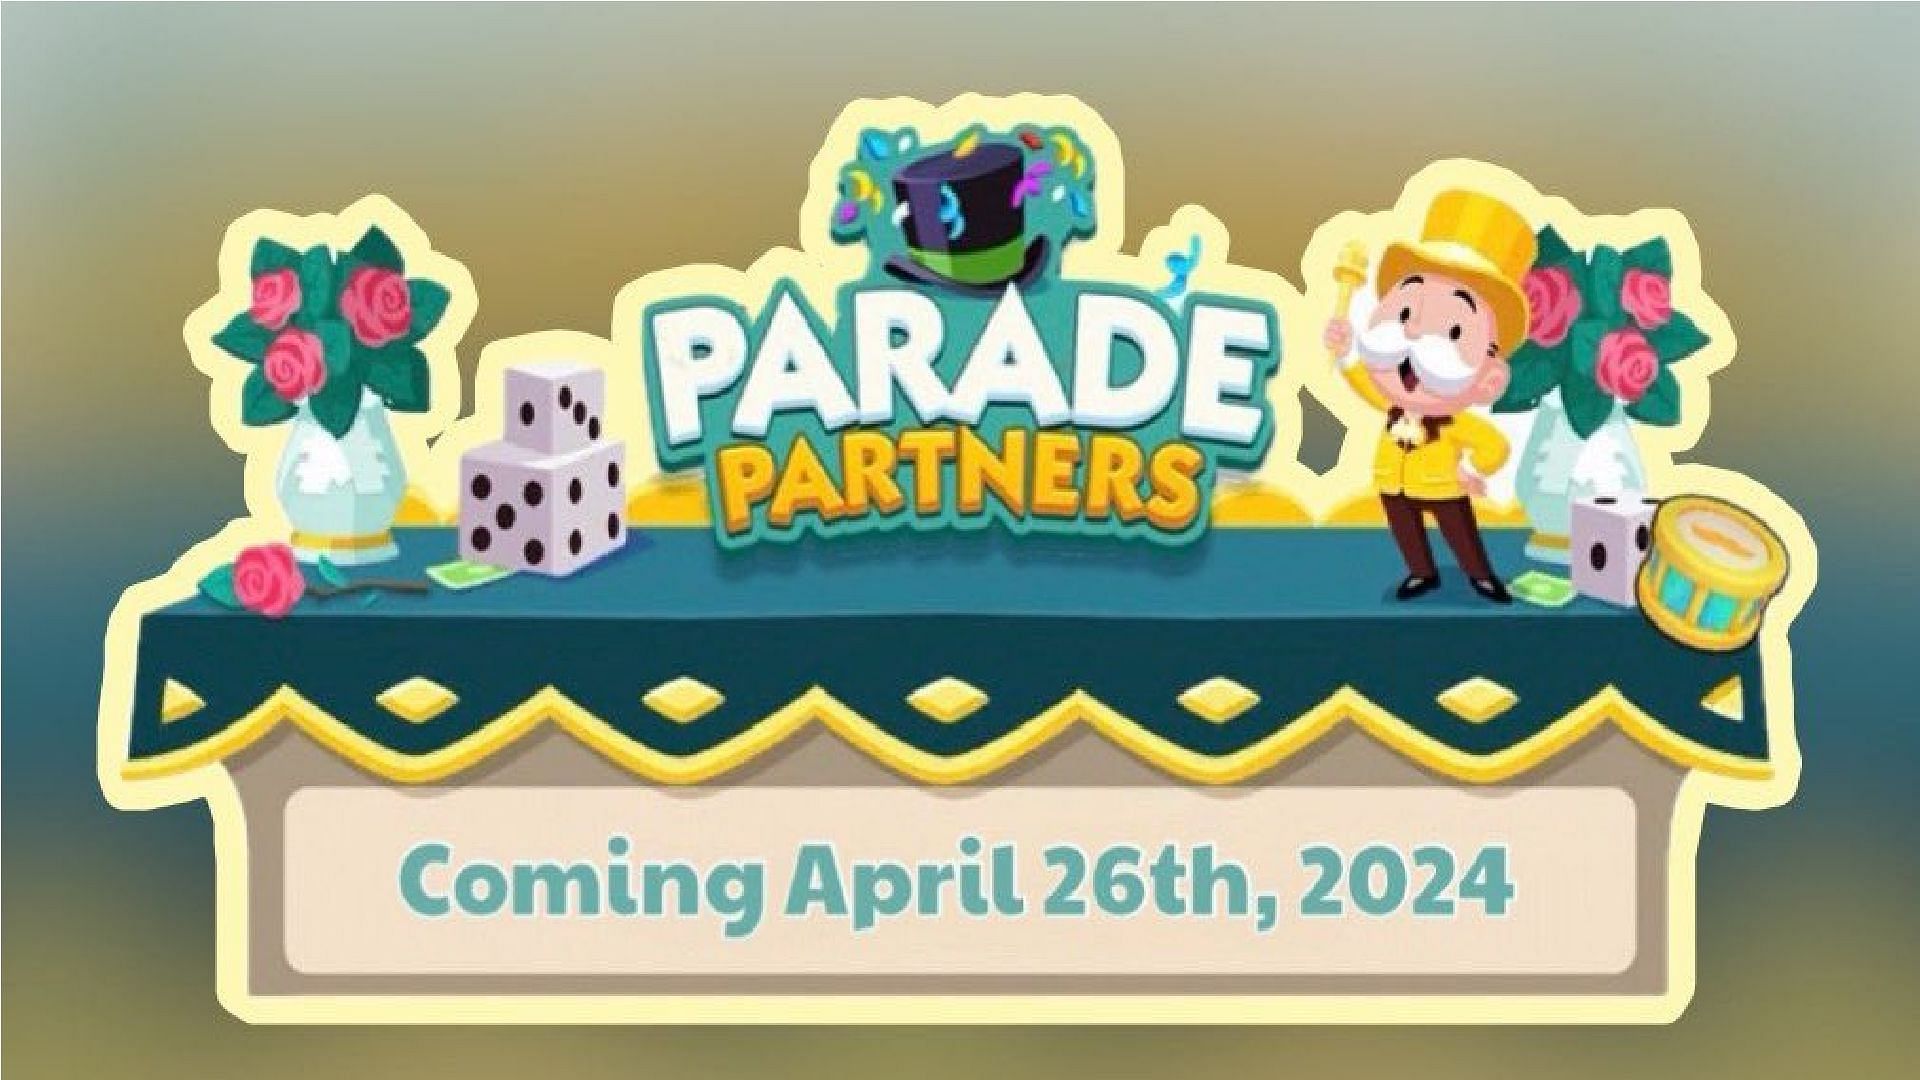 Monopoly Go Partner Event 2022